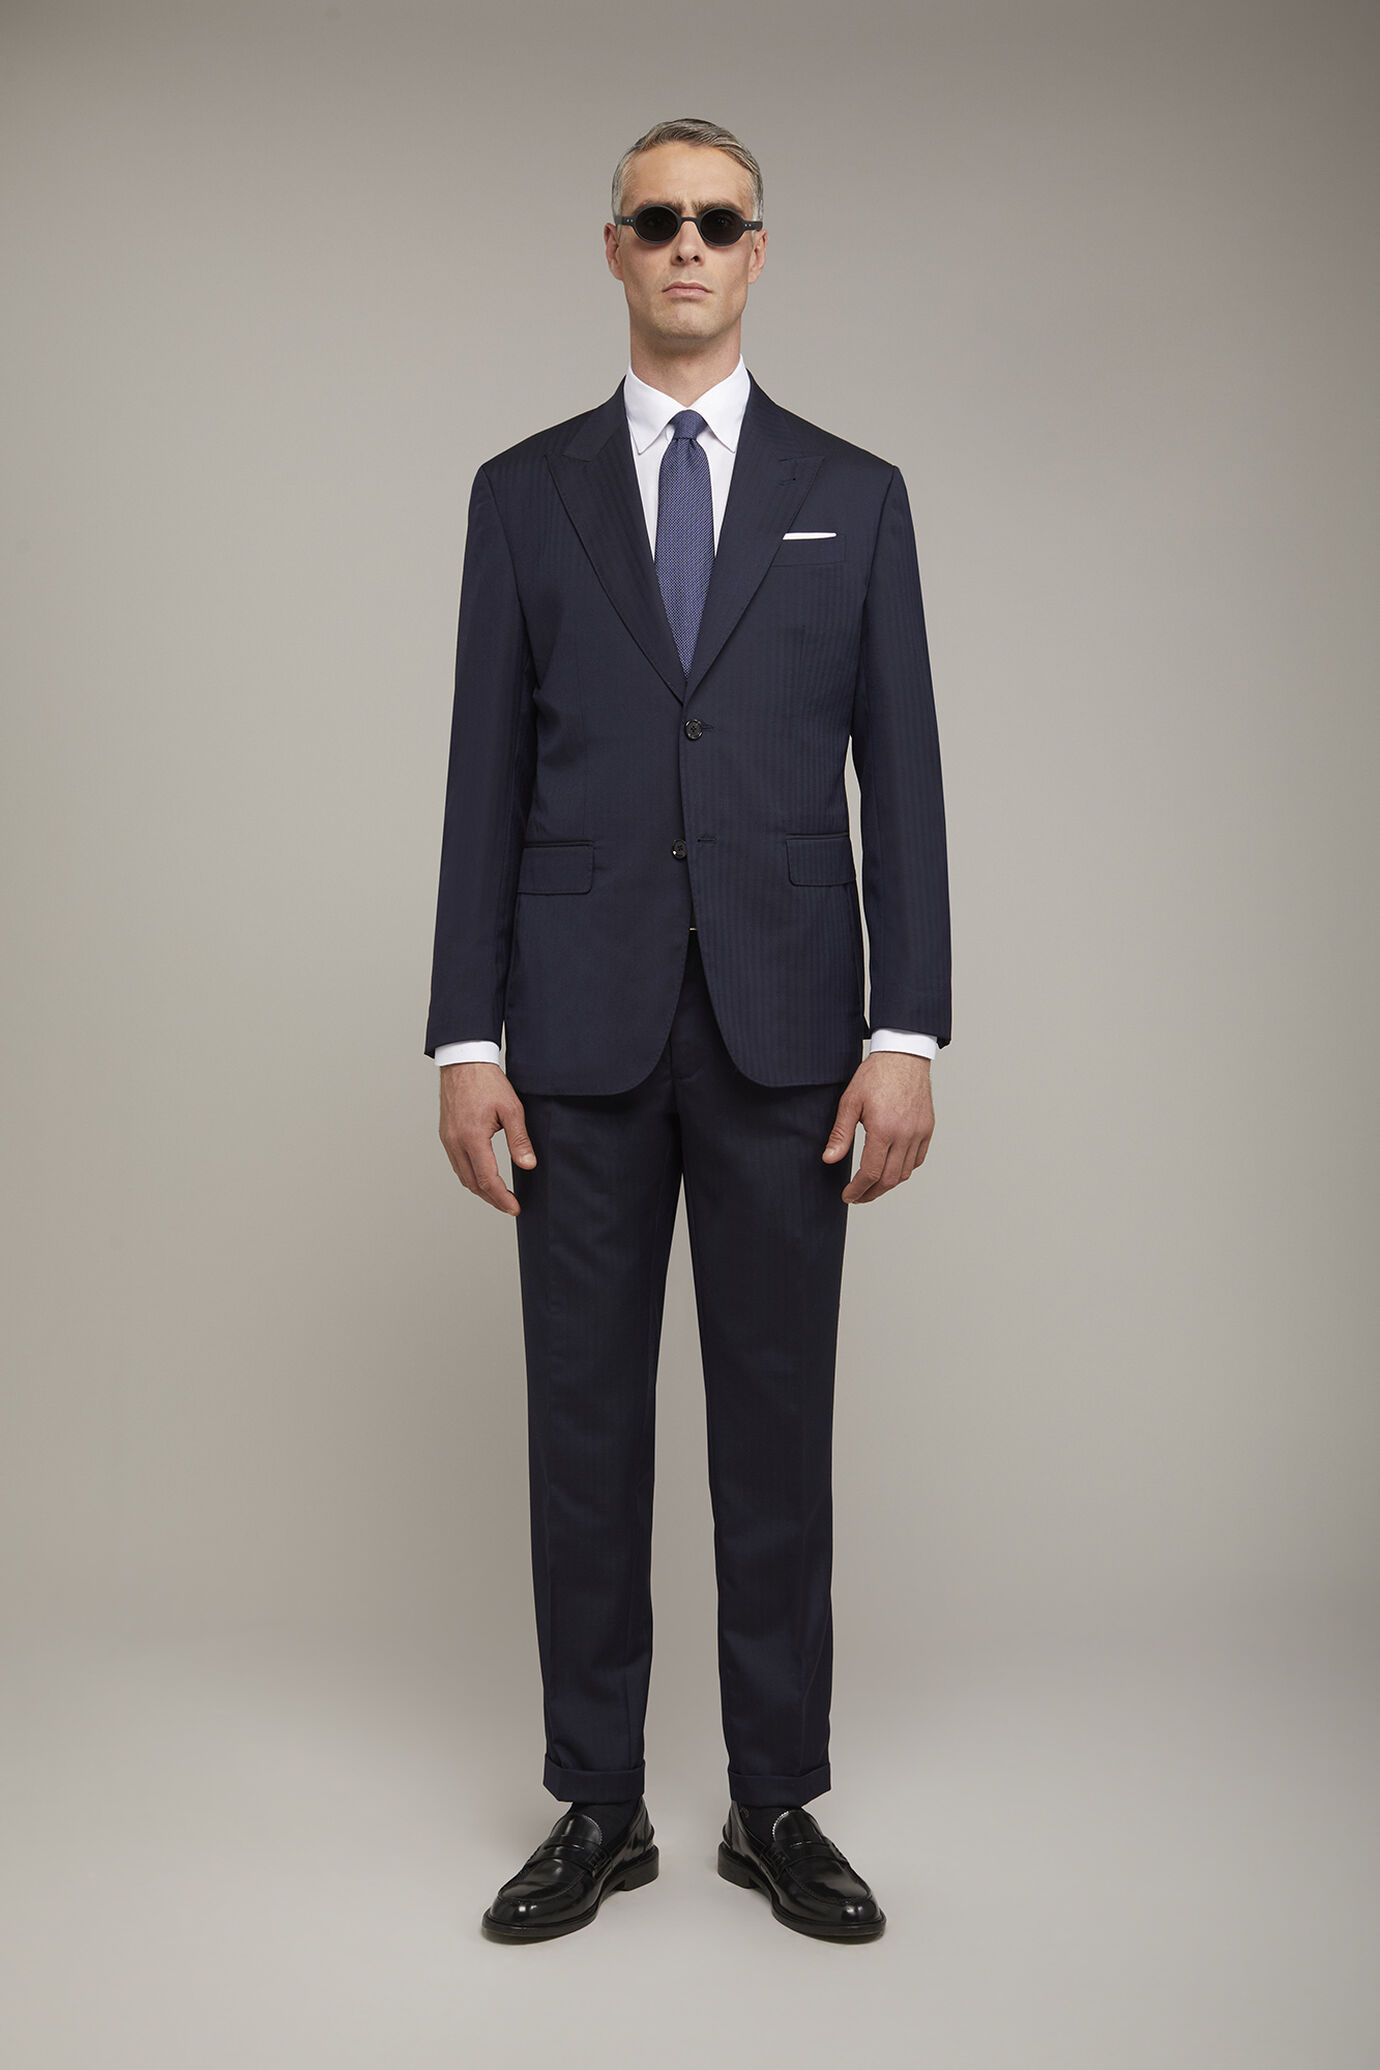 Men's single-breasted suit with herringbone pattern regular fit